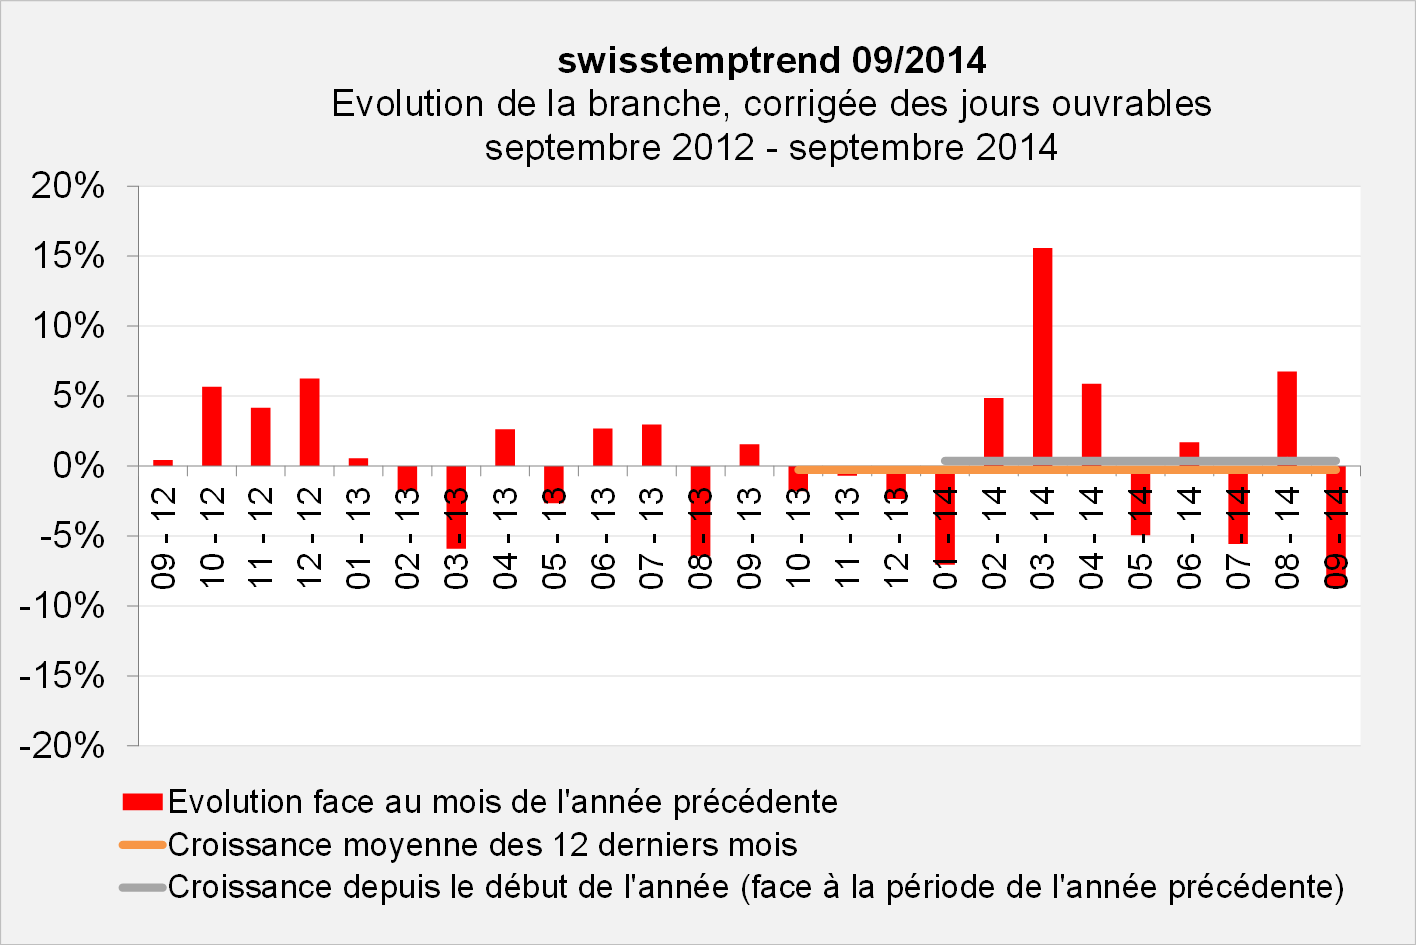 swisstempindex septembre 2014 Evolution